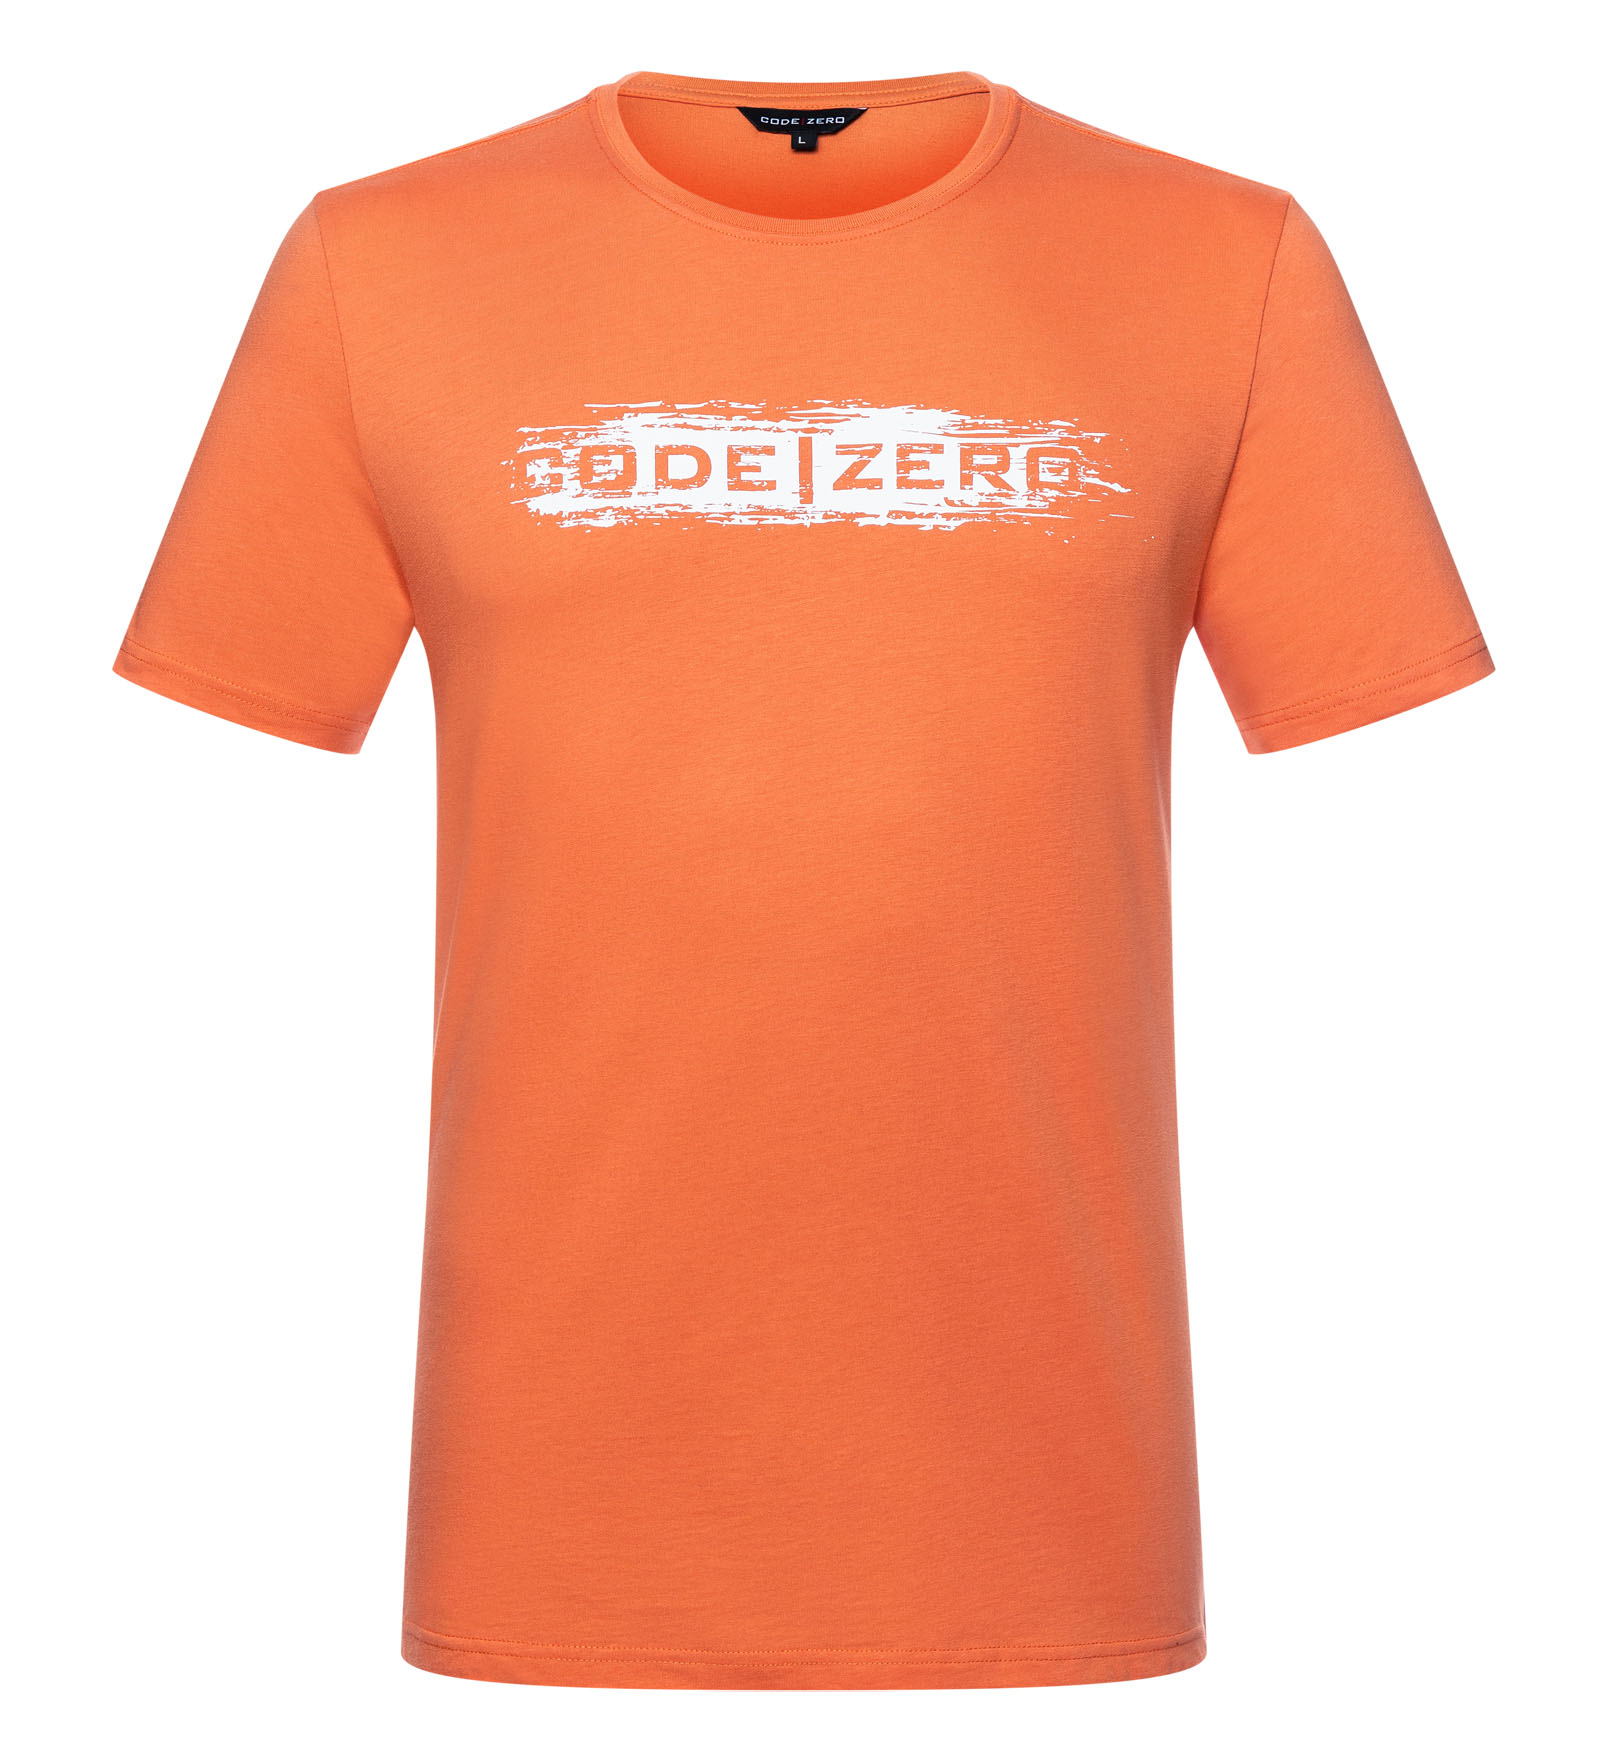 T-Shirt Herren Painted orange L CODE-ZERO von CODE-ZERO